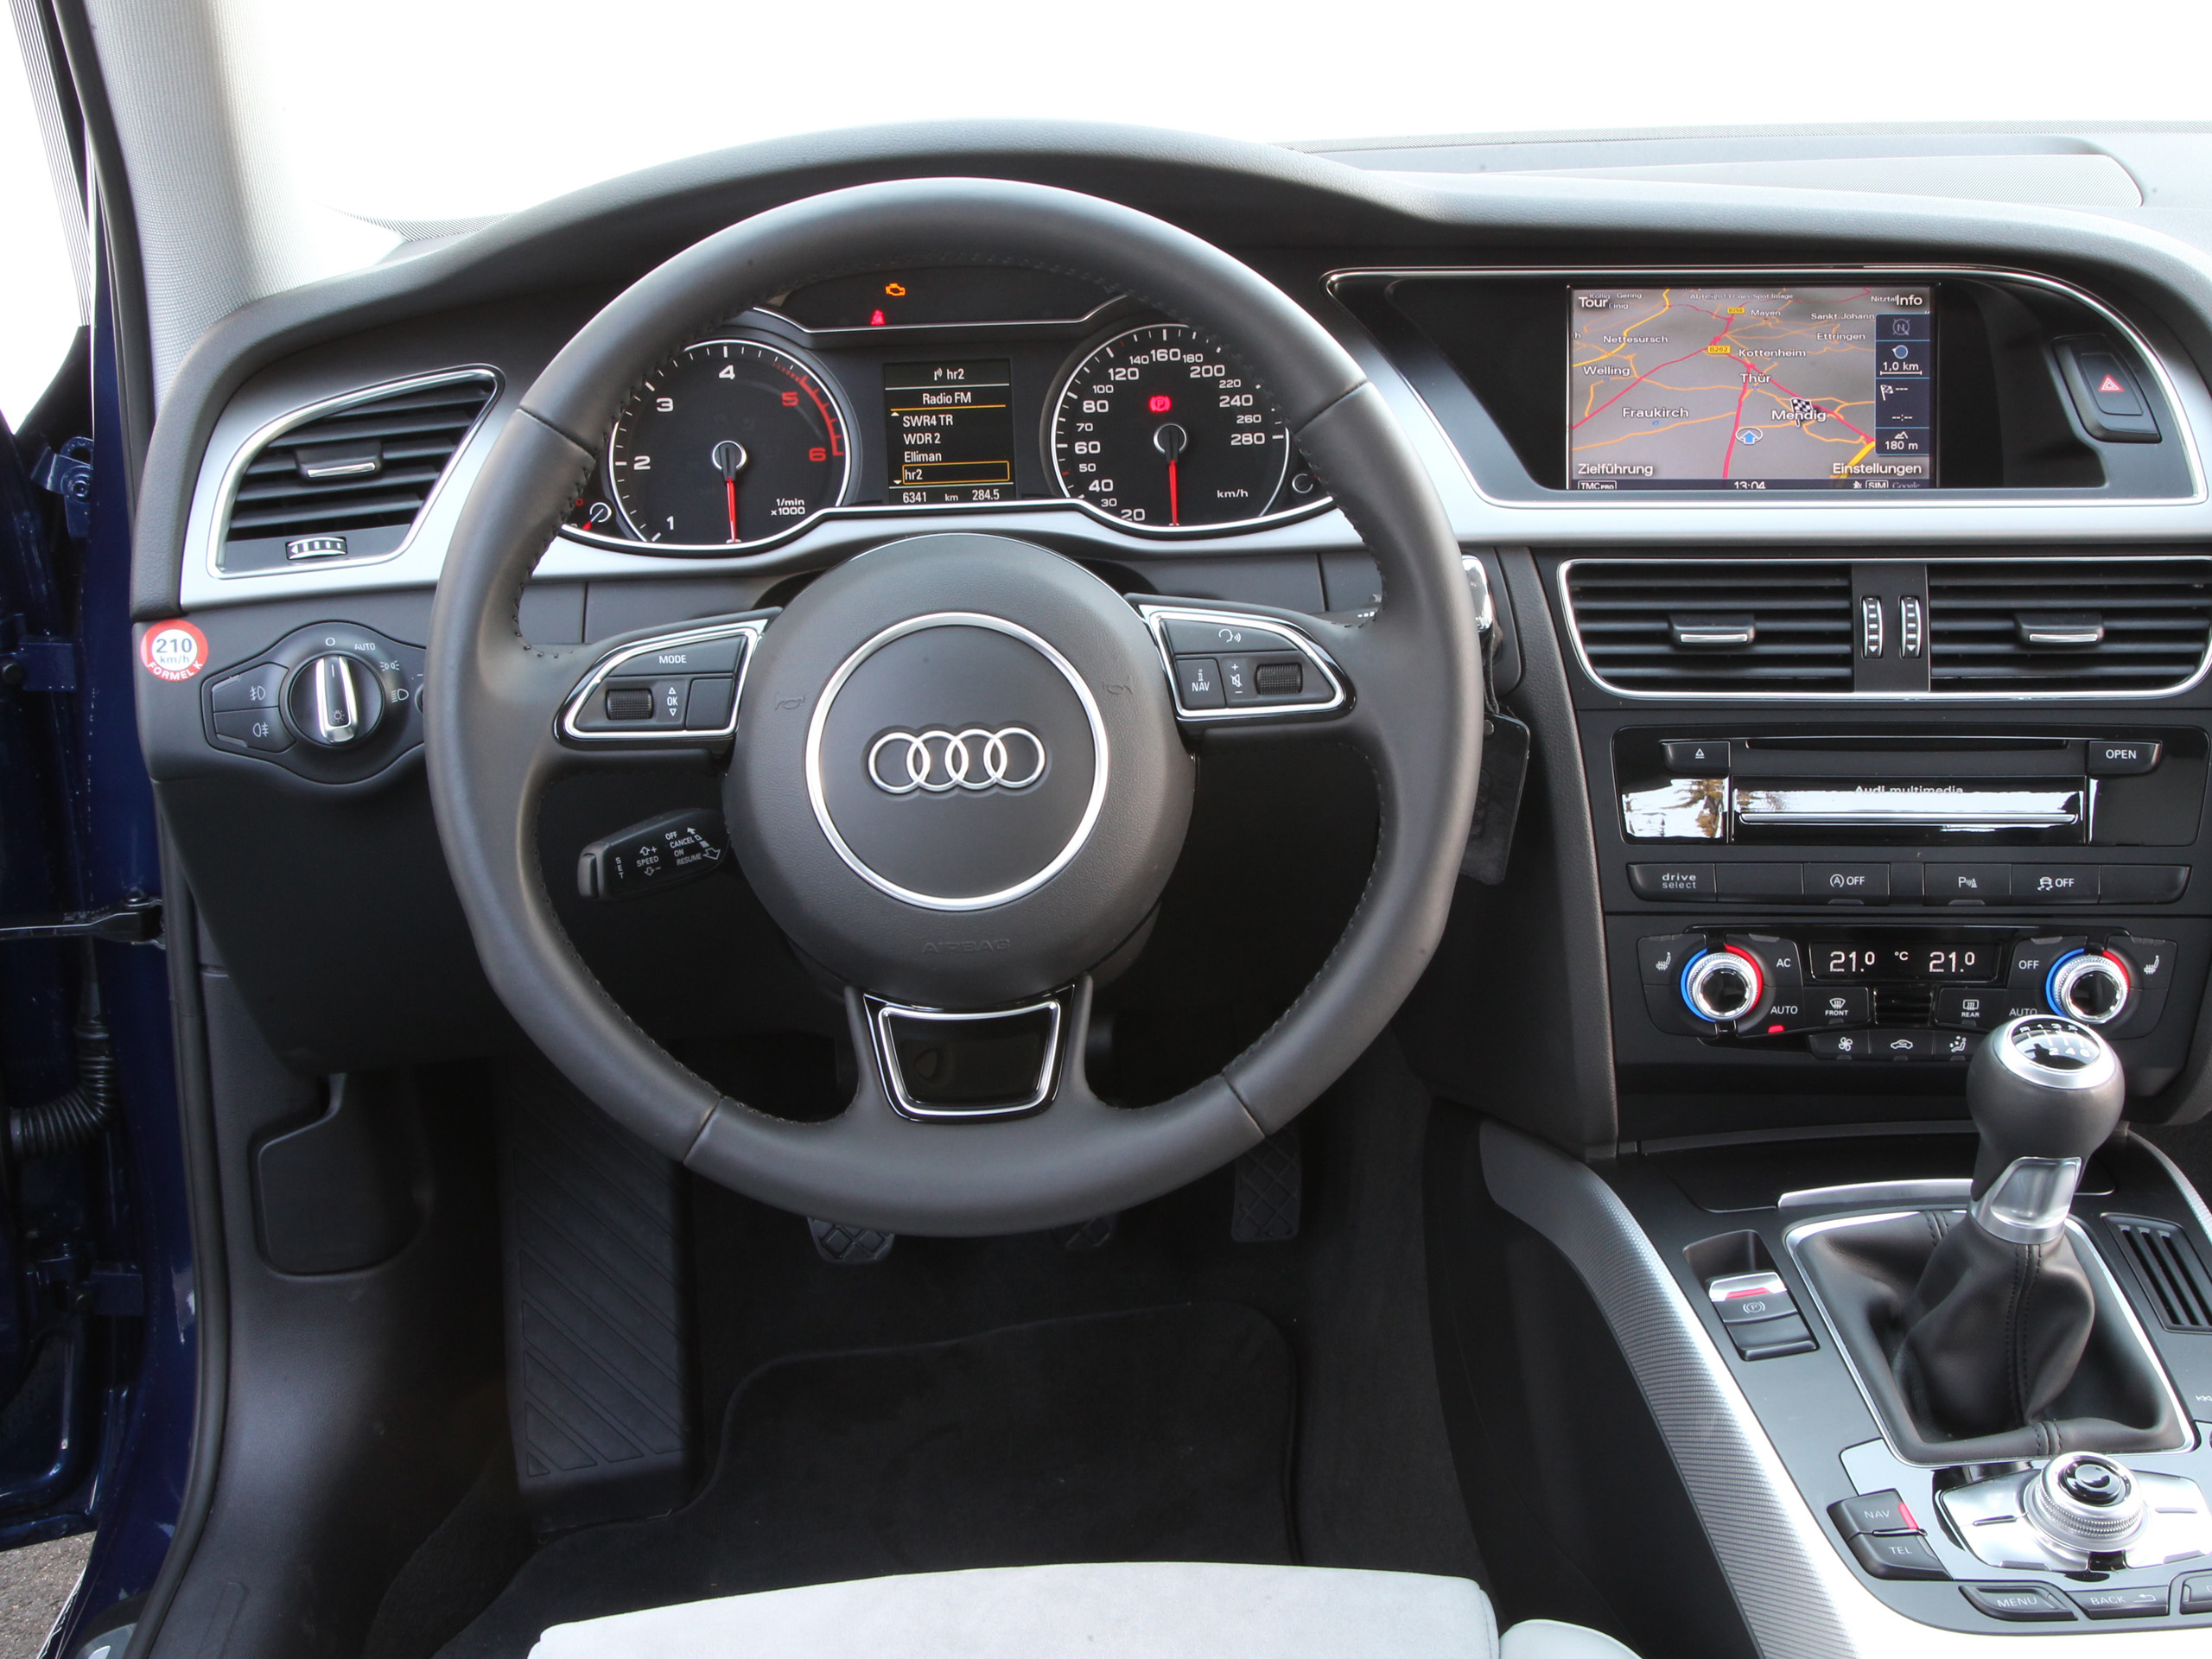 Konzept Vergleich Audi A3 Sportback Gegen Audi A4 Avant Im